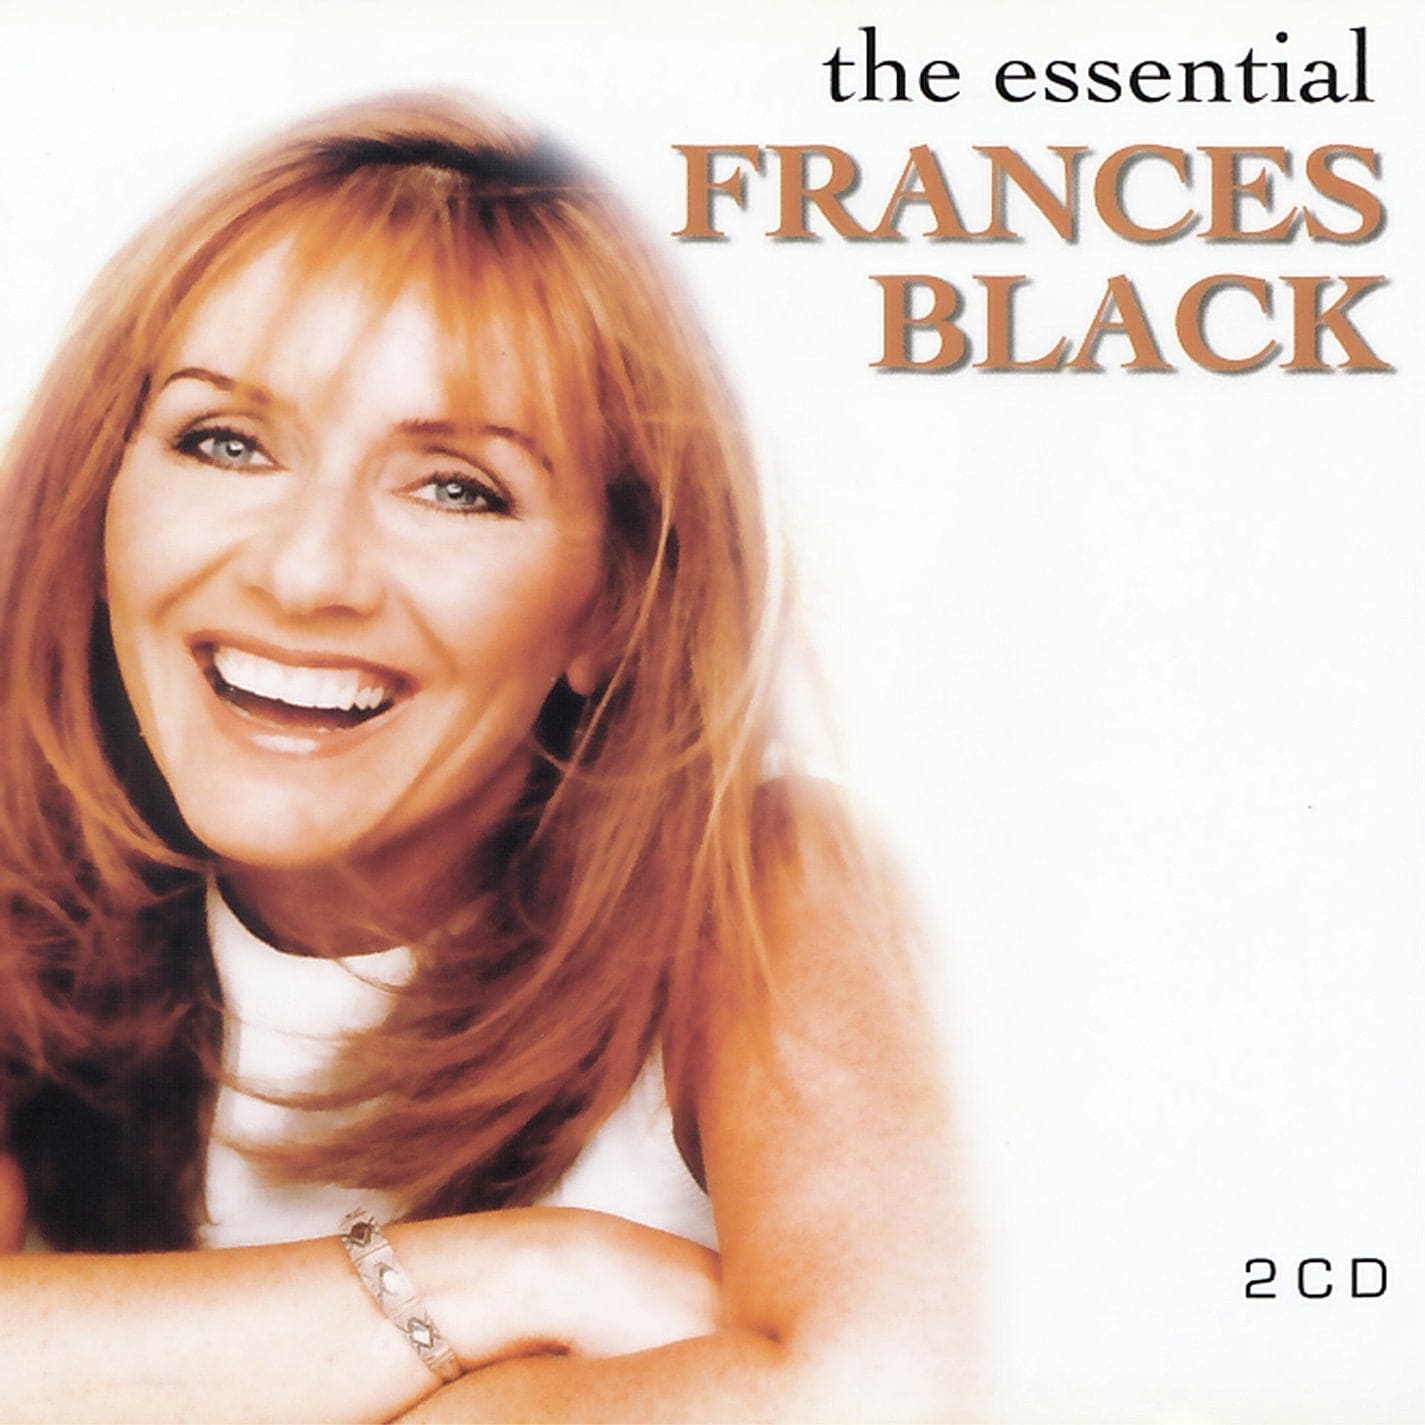 The Essential Frances Black - Frances Black [2CD]